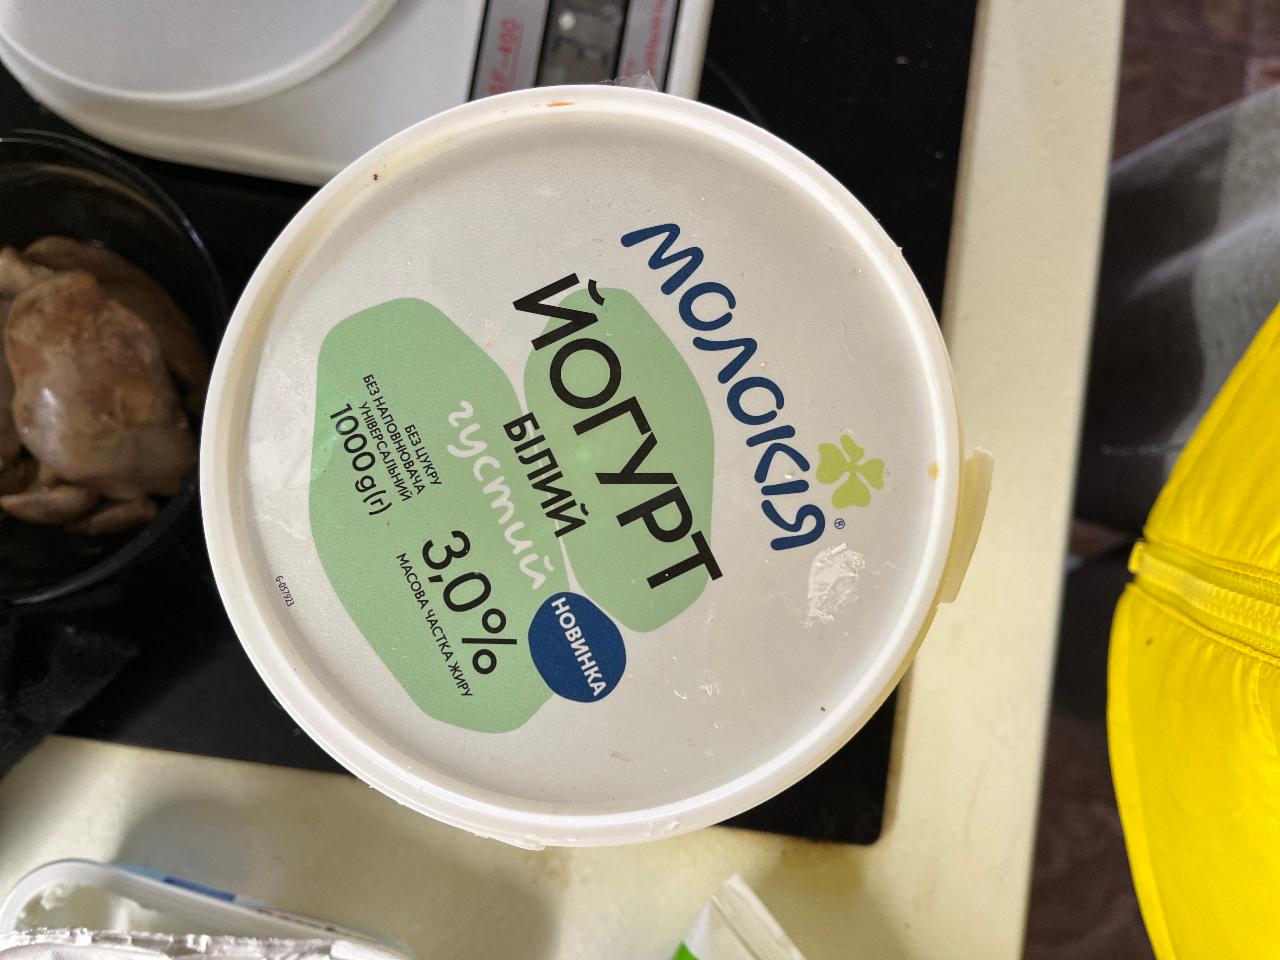 Фото - йогурт 3% Молокия